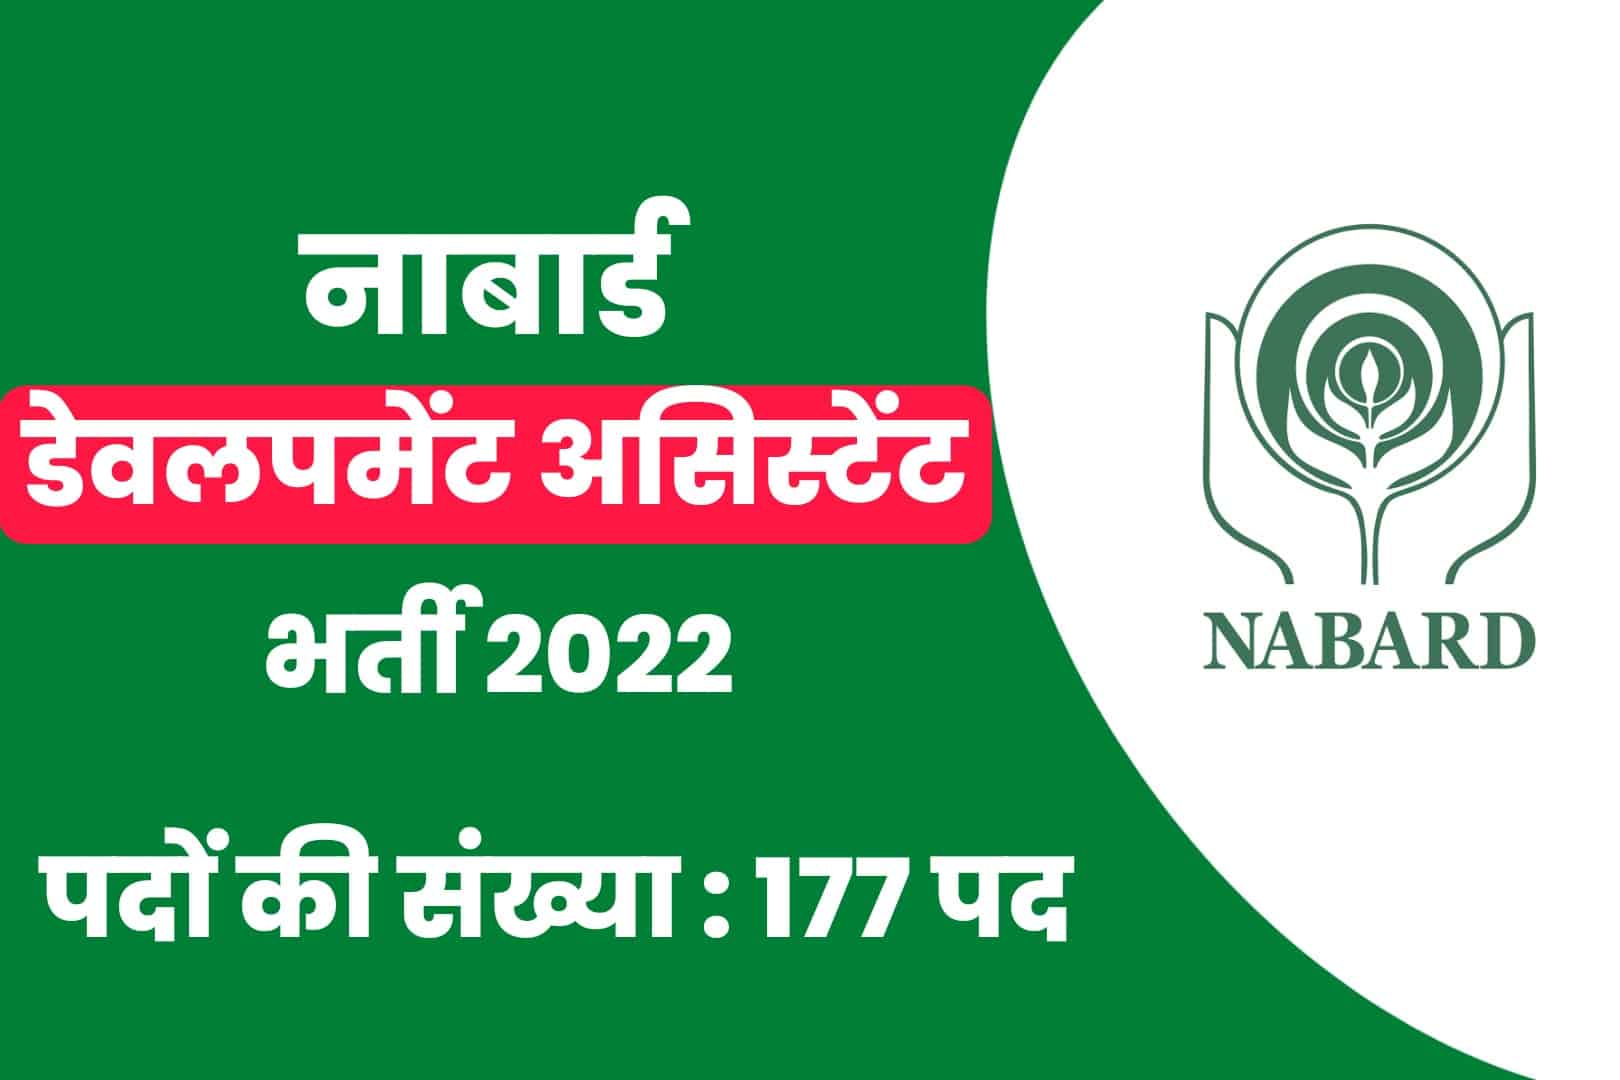 Nabard Development Assistant Recruitment 2022 Online Form | नाबार्ड डेवलपमेंट असिस्टेंट भर्ती 2022